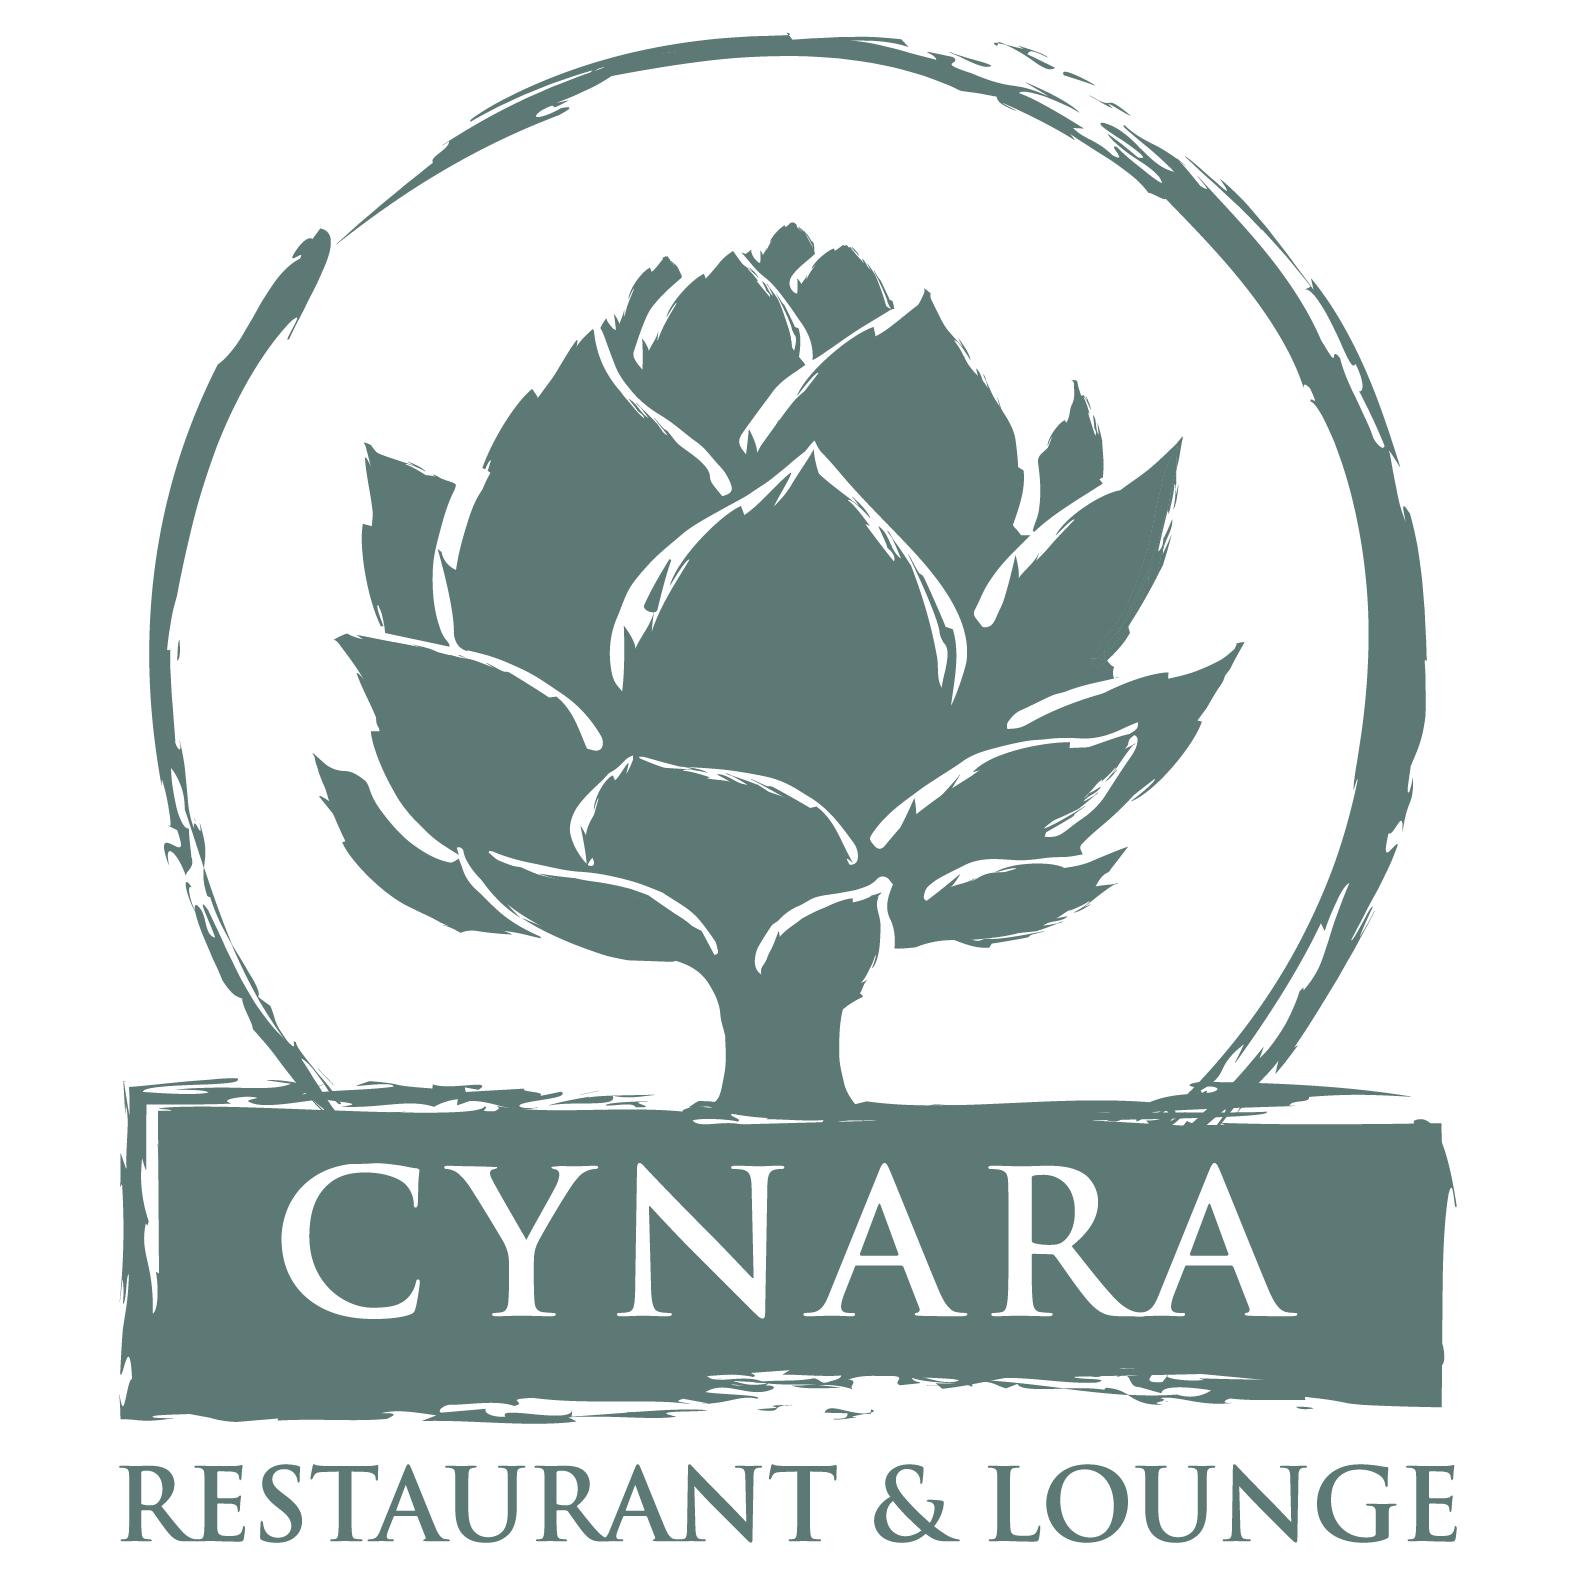 Cynara Restaurant & Lounge